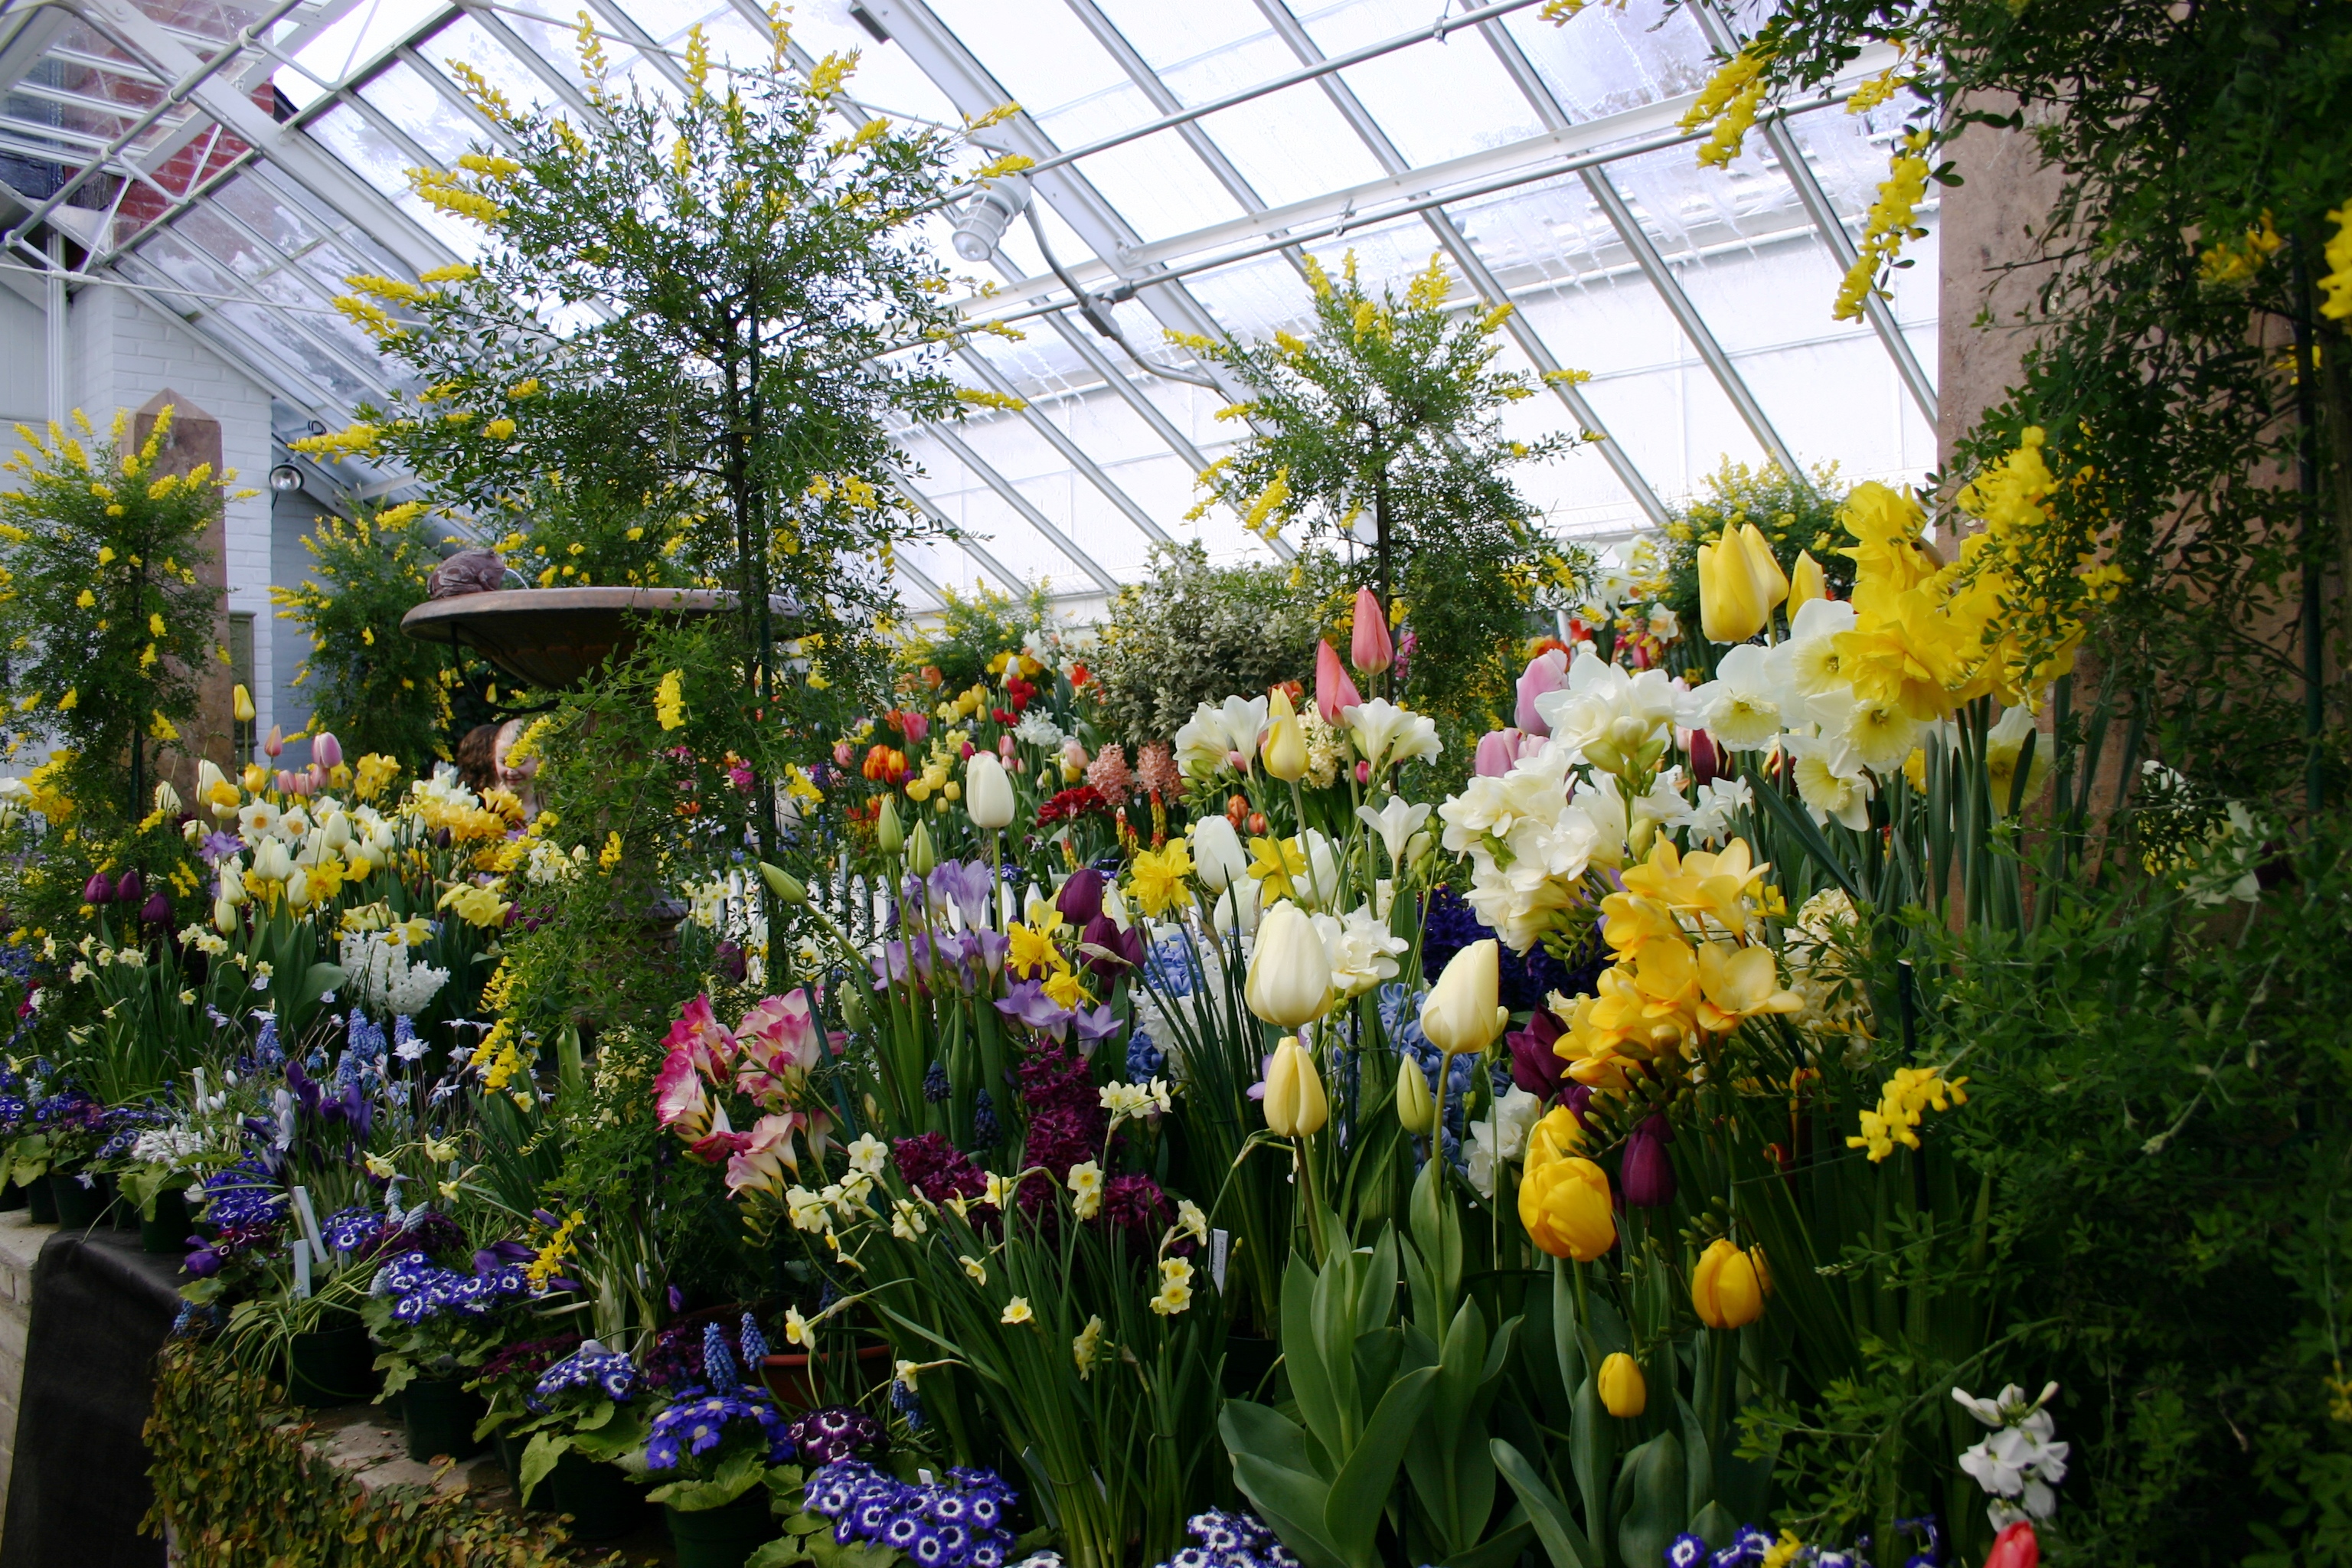 File:Smith botanic garden greenhouse.JPG - Wikipedia